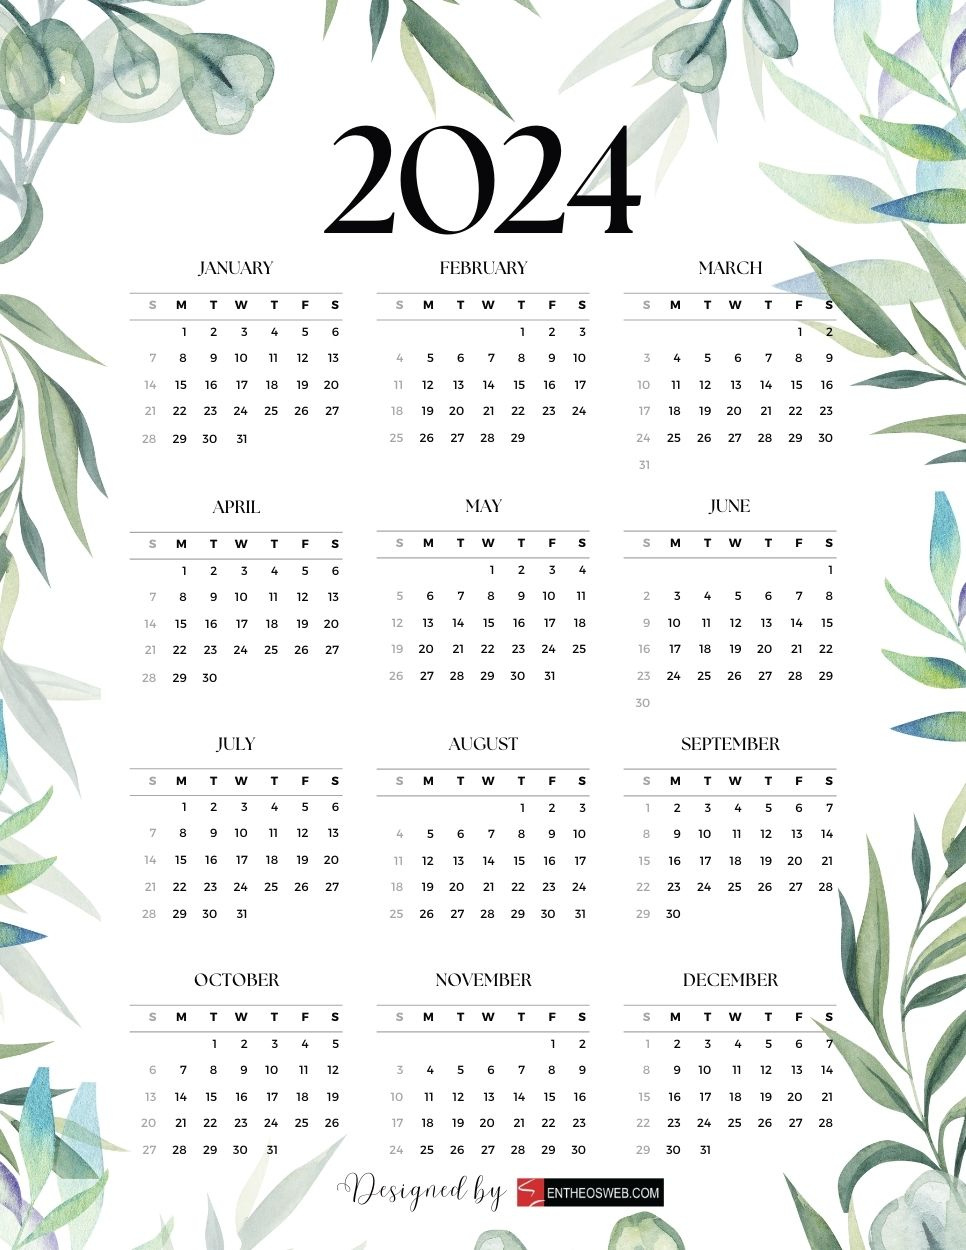 2024 Pdf Calendars – Free Printable Pdf Downloads | Entheosweb with Free Printable Calendar 2024 Plants